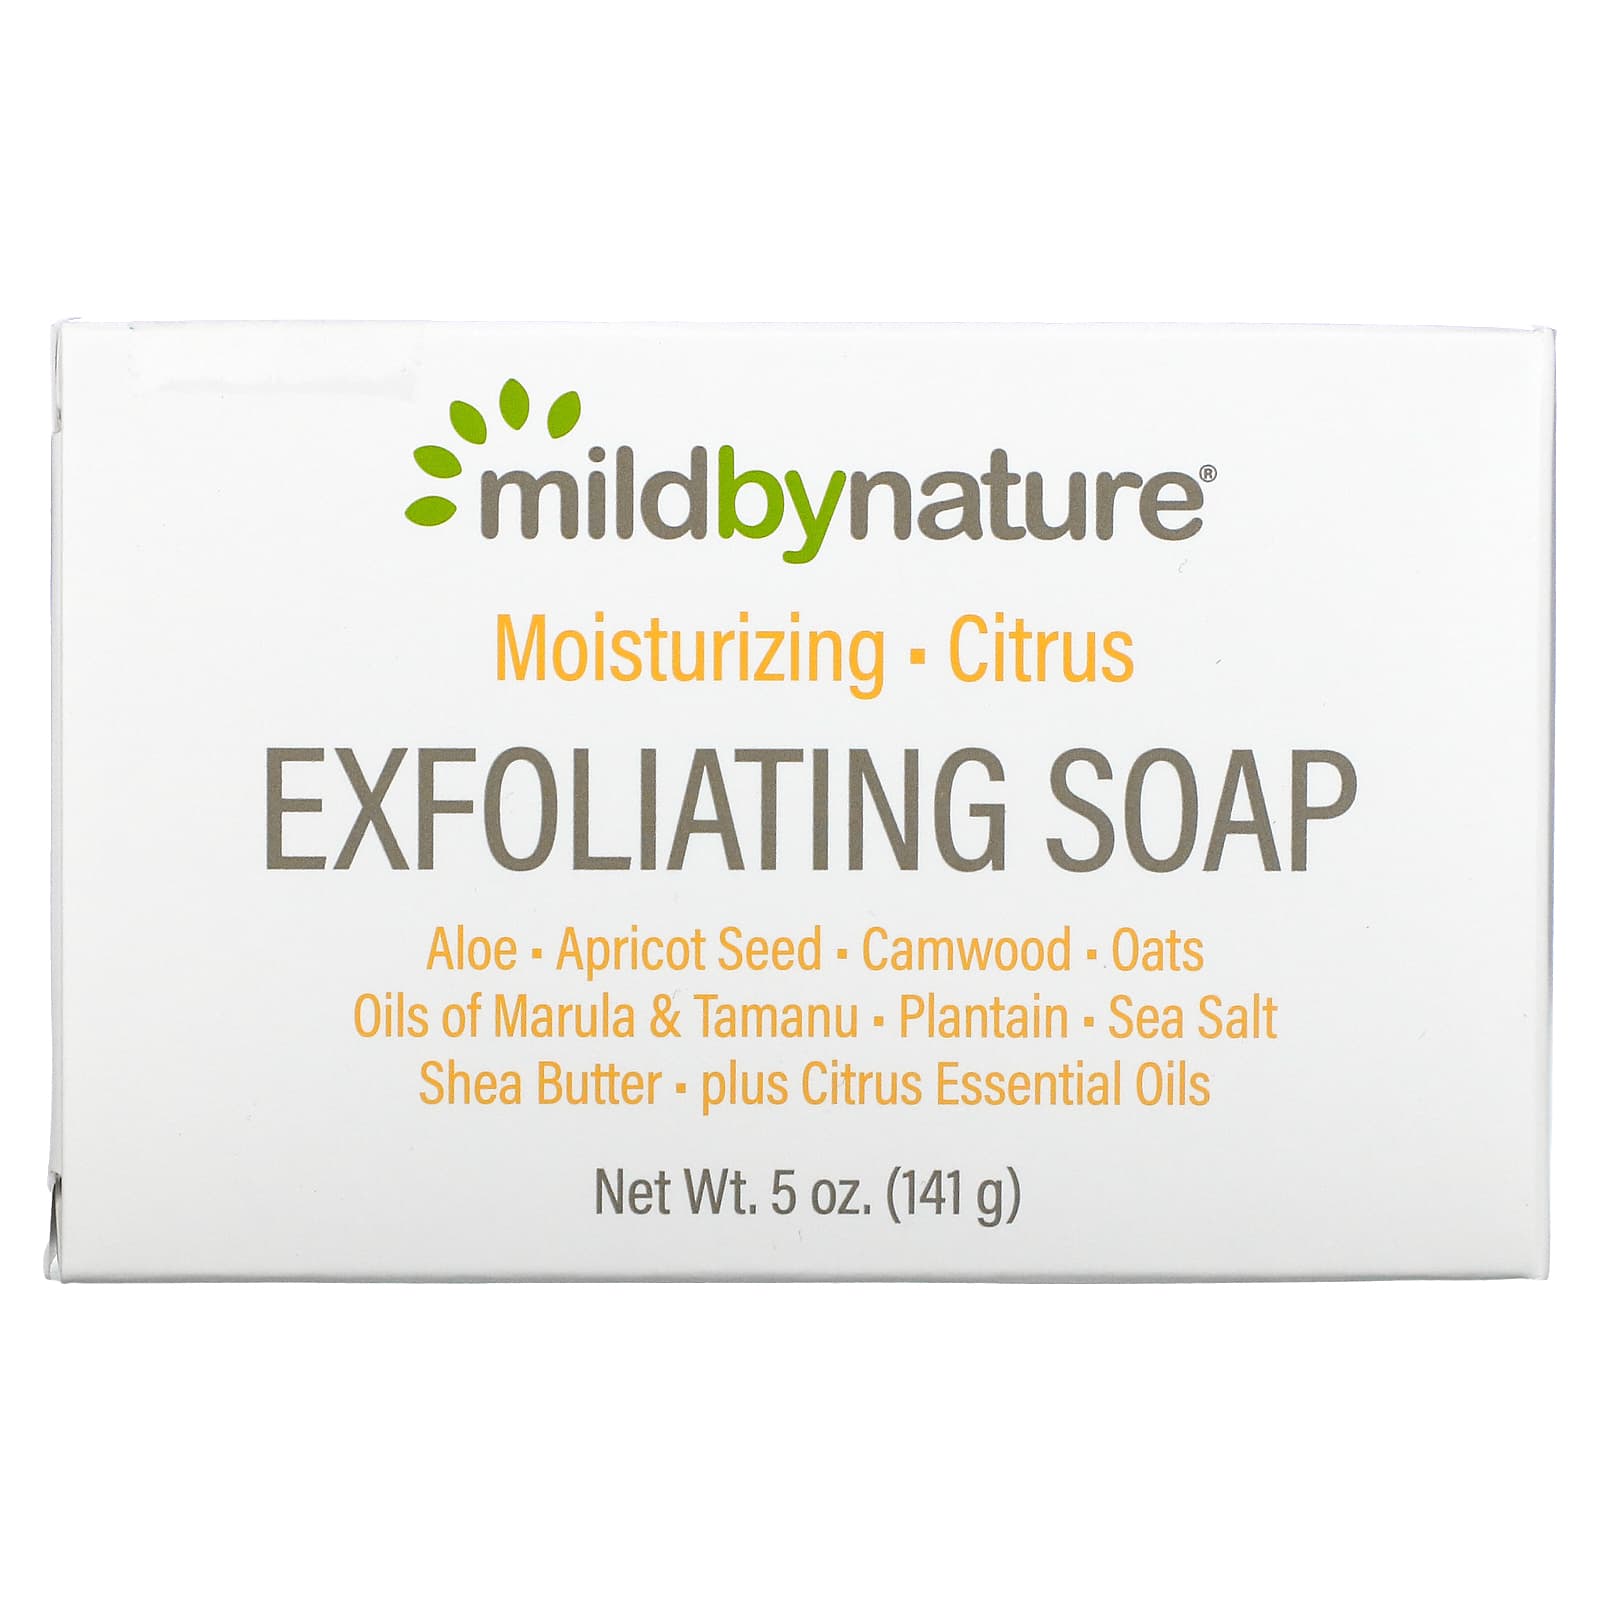 Mild By Nature, Exfoliating Bar Soap, with Marula & Tamanu Oils plus Shea Butter, Citrus (141 g)